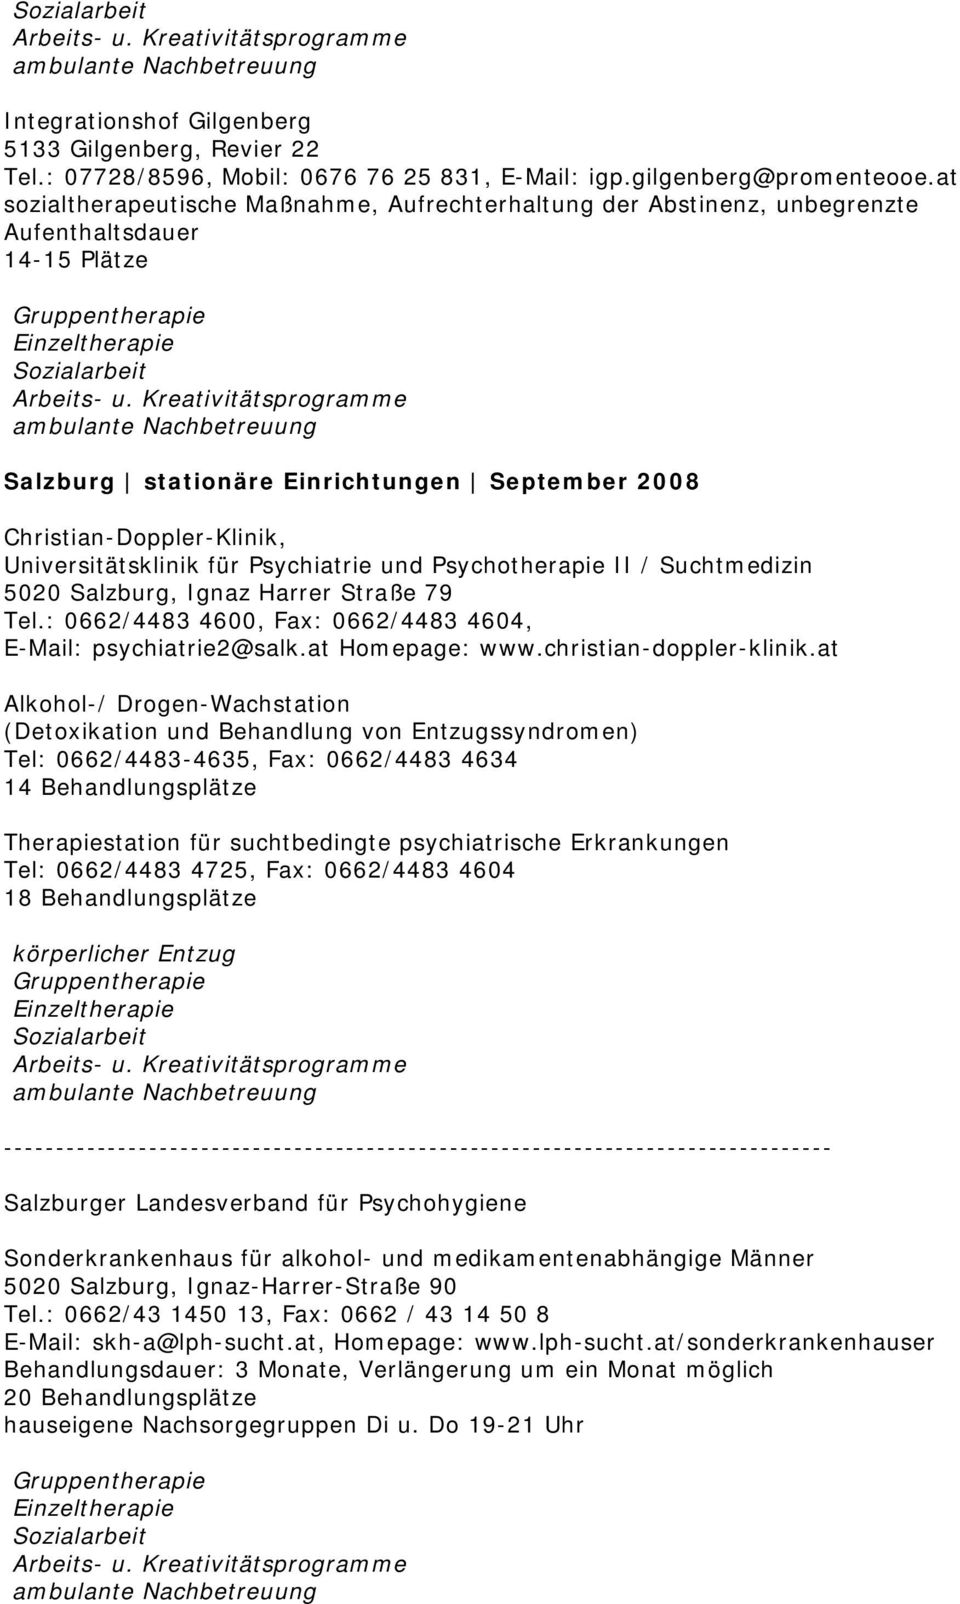 Universitätsklinik für Psychiatrie und Psychotherapie II / Suchtmedizin 5020 Salzburg, Ignaz Harrer Straße 79 Tel.: 0662/4483 4600, Fax: 0662/4483 4604, E-Mail: psychiatrie2@salk.at Homepage: www.